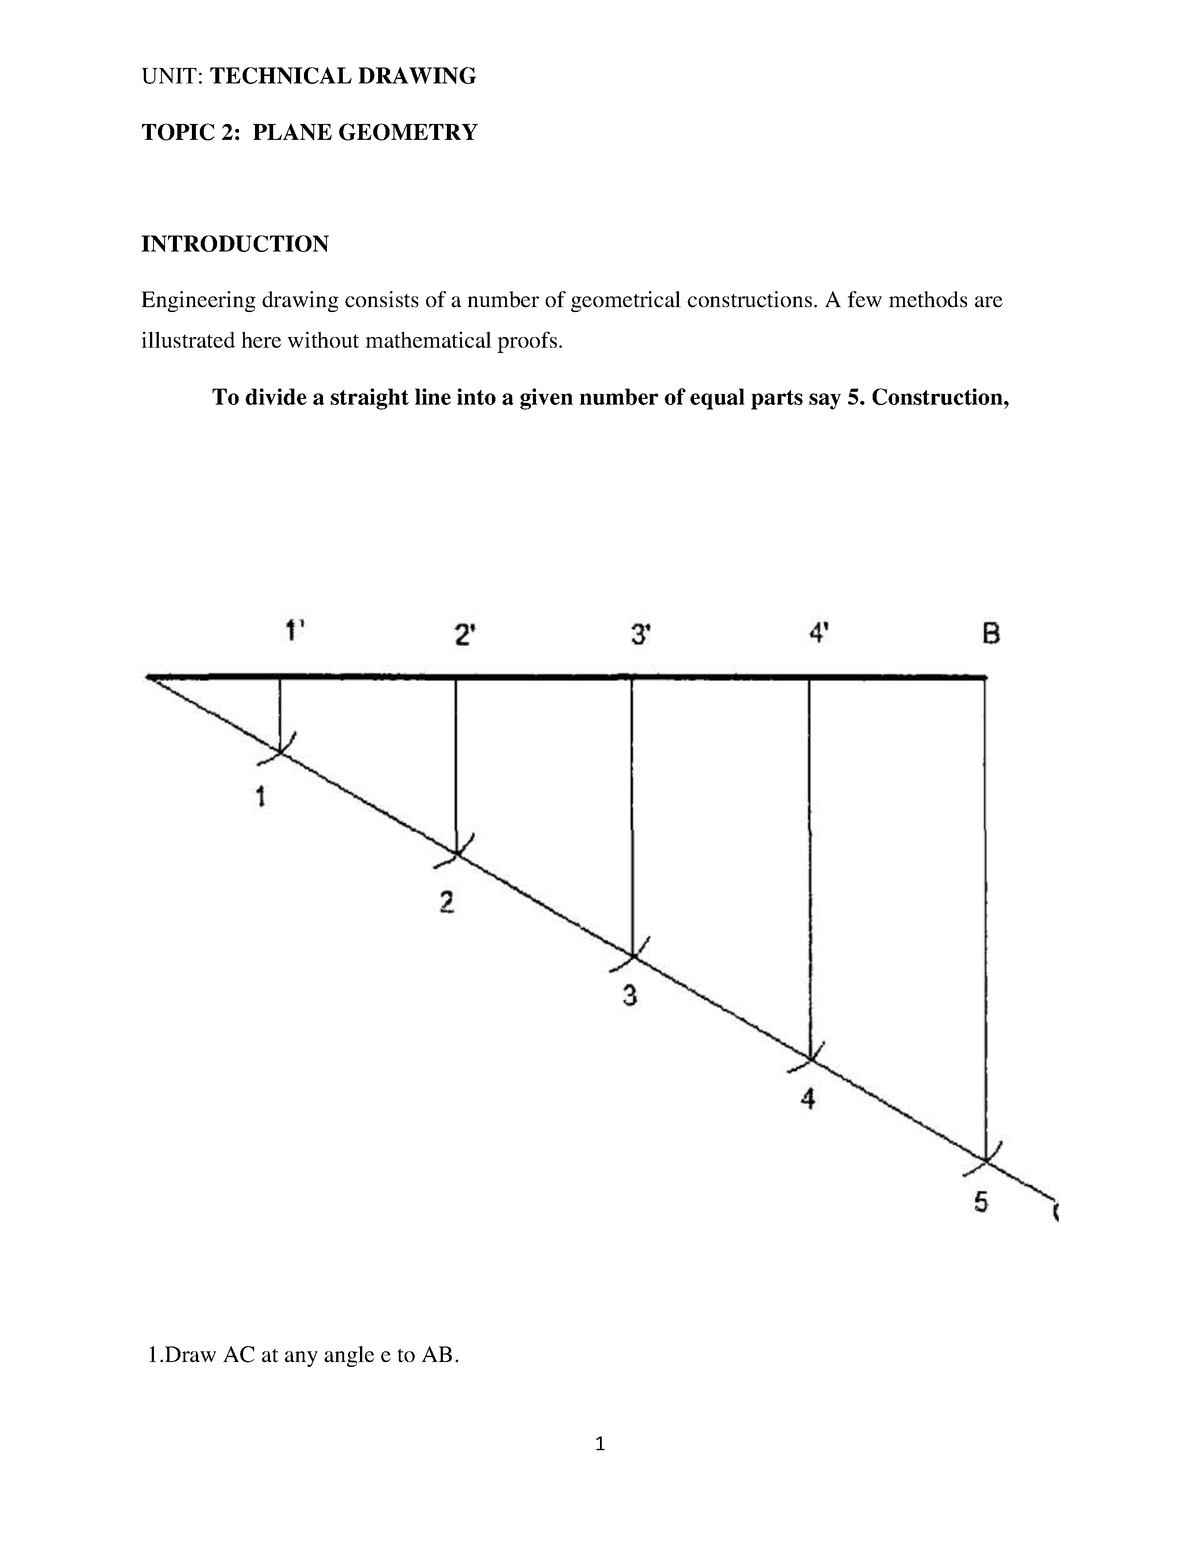 geometry - Plane cutting a pyramid (drawing) - Mathematics Stack Exchange